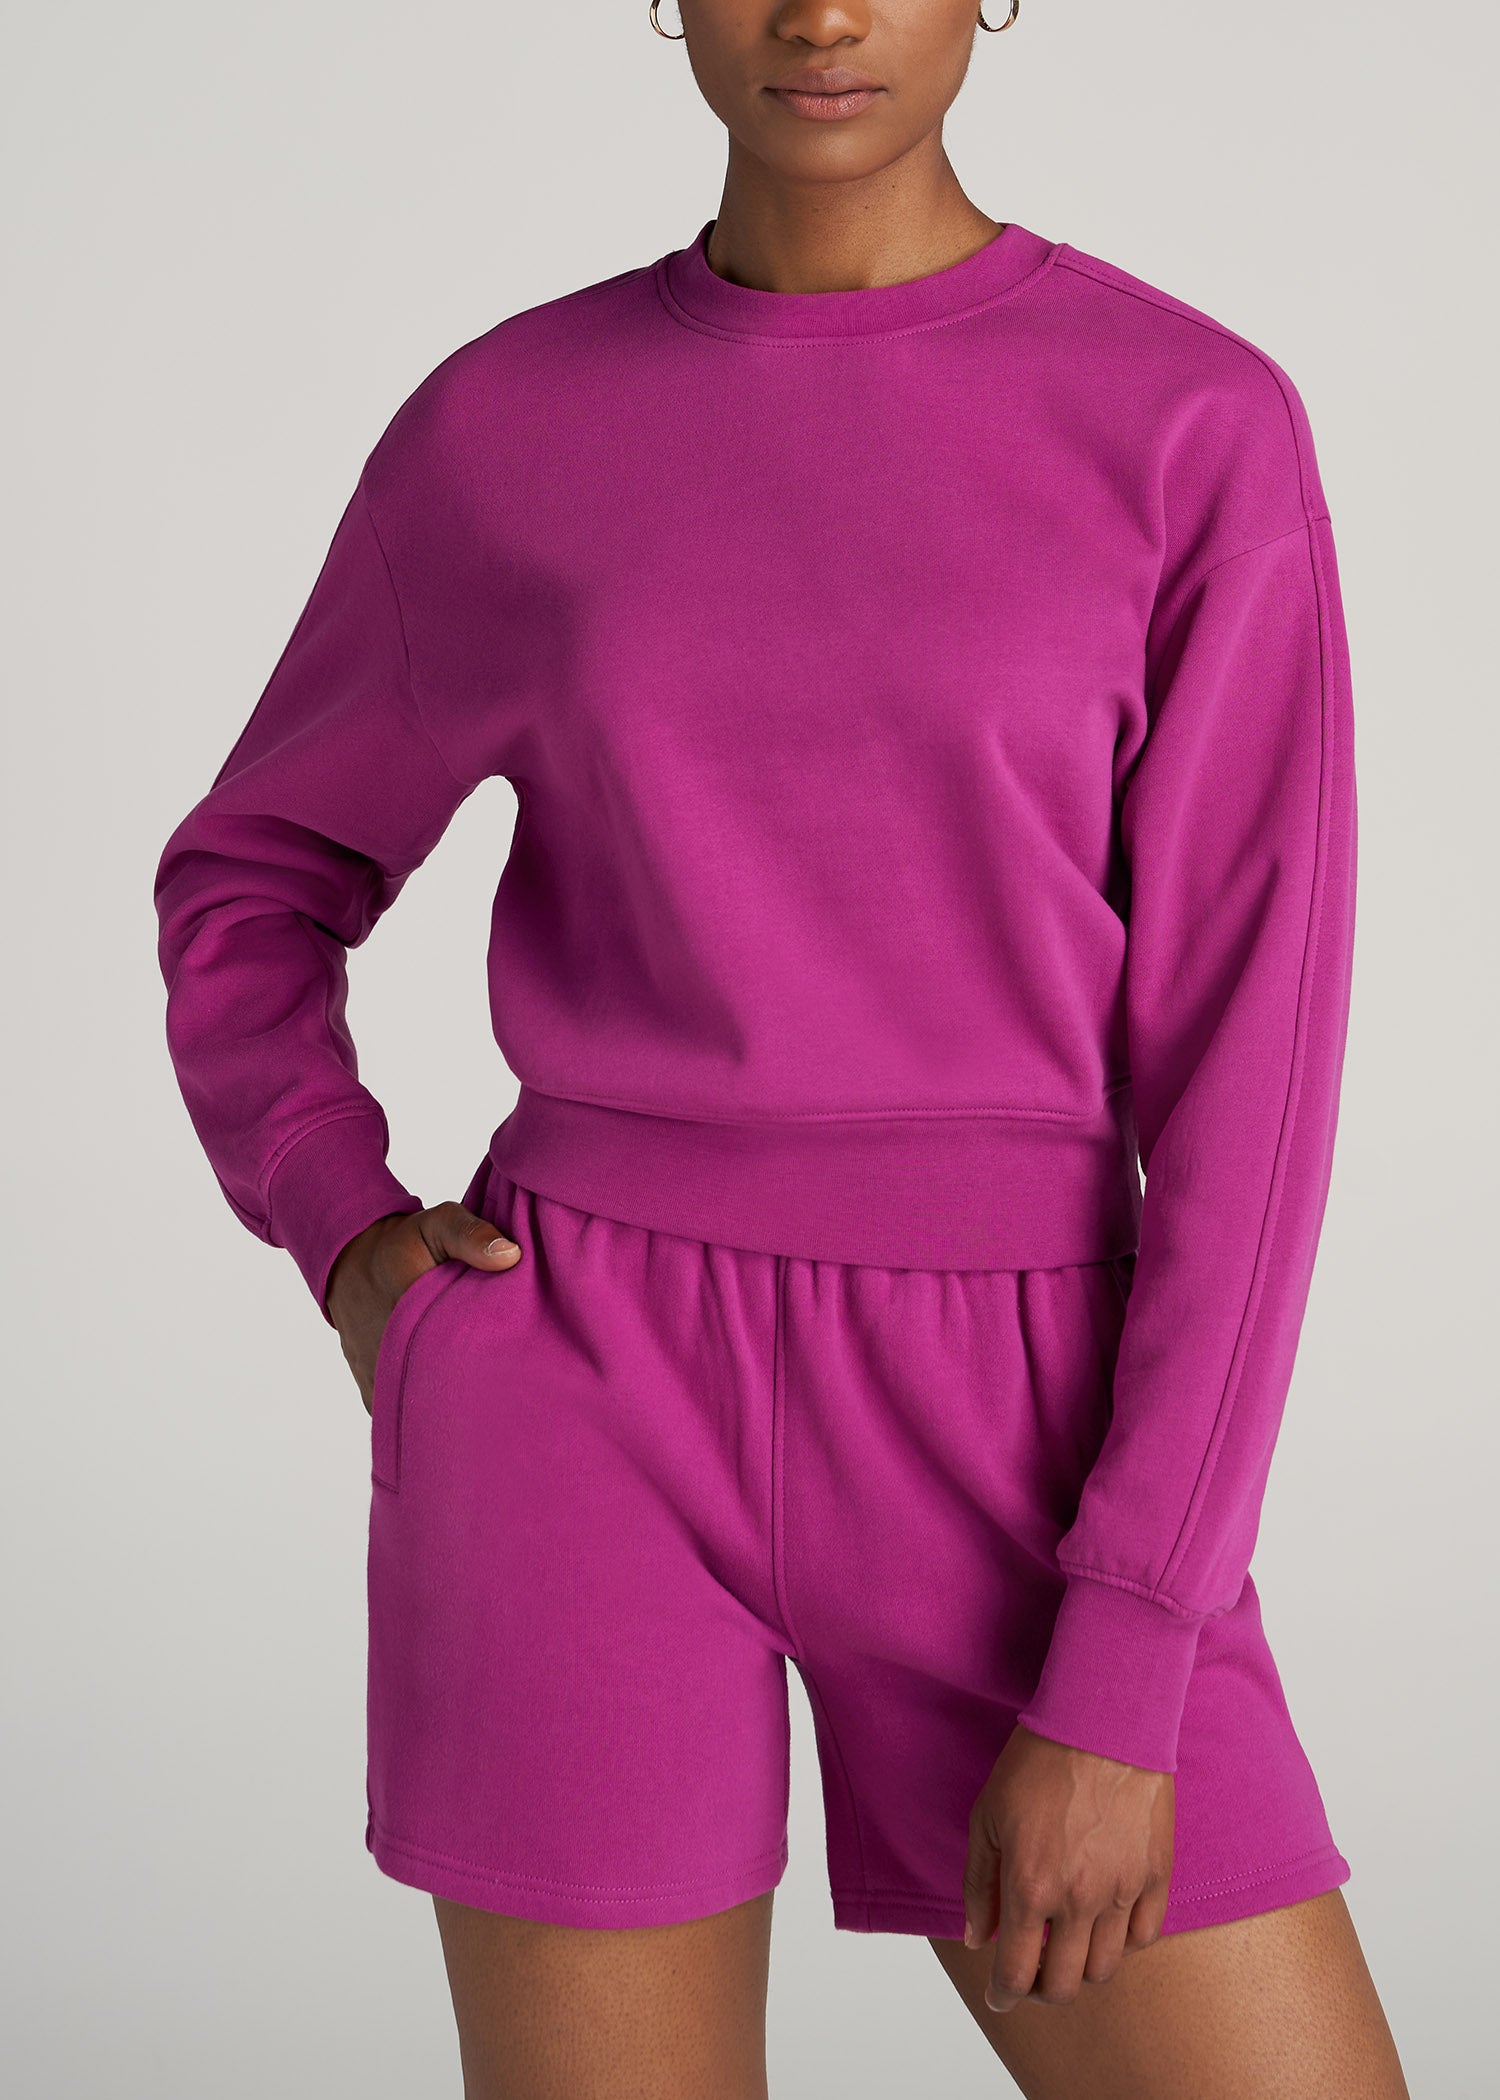       American-Tall-Women-WKND-Fleece-Cropped-Crew-Sweatshirt-Pink-Orchid-front